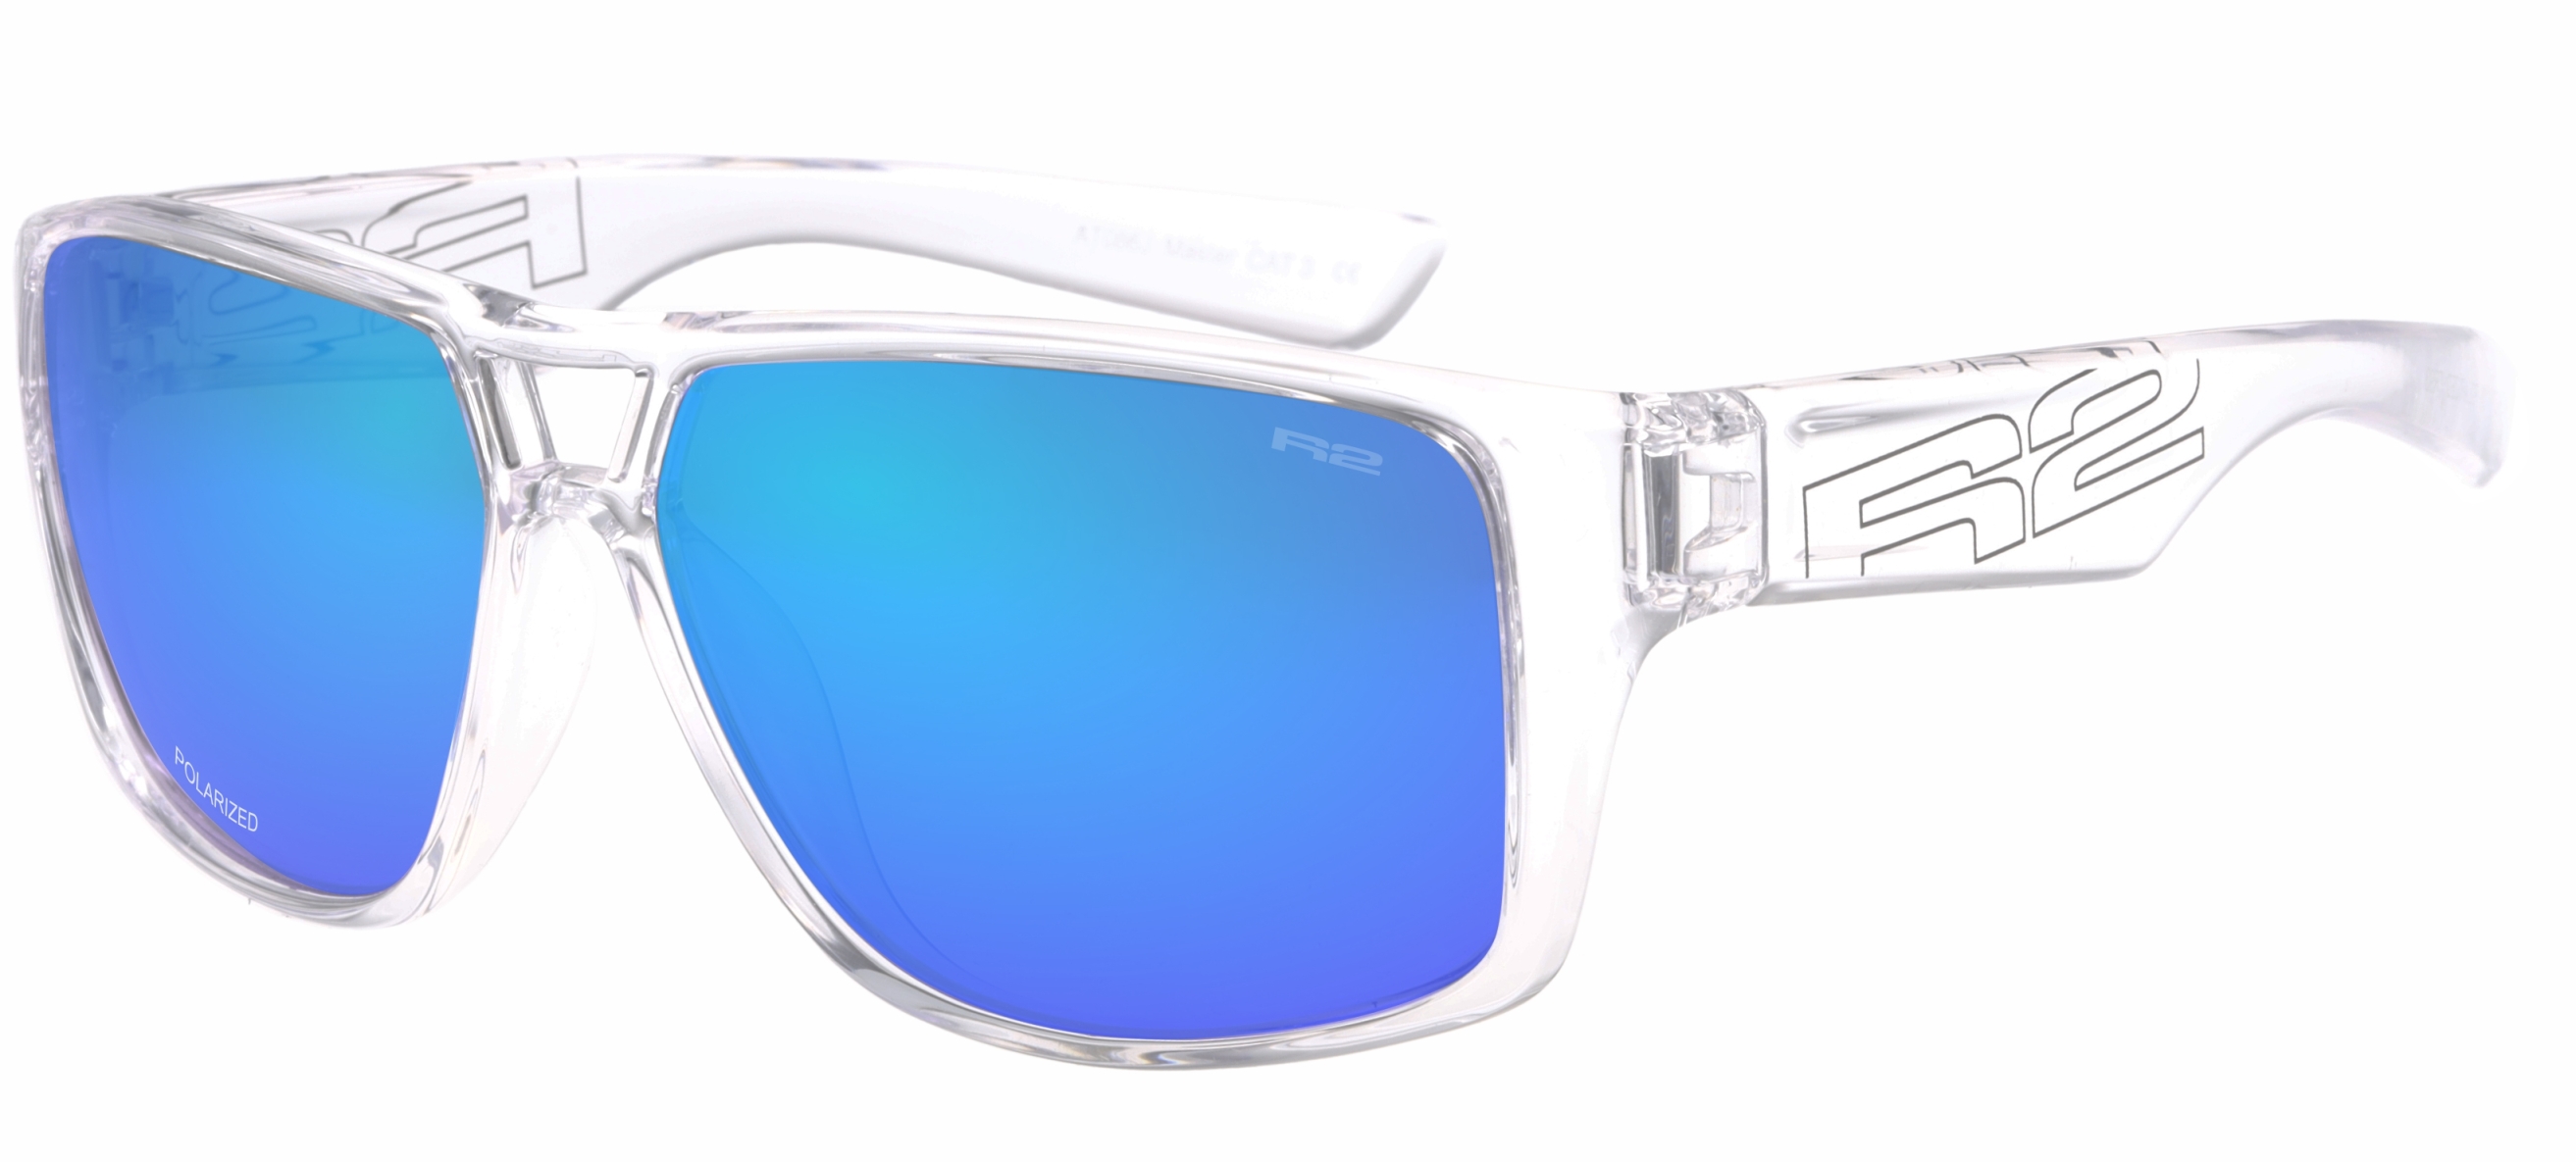 Sport sunglasses R2 MASTER AT086J